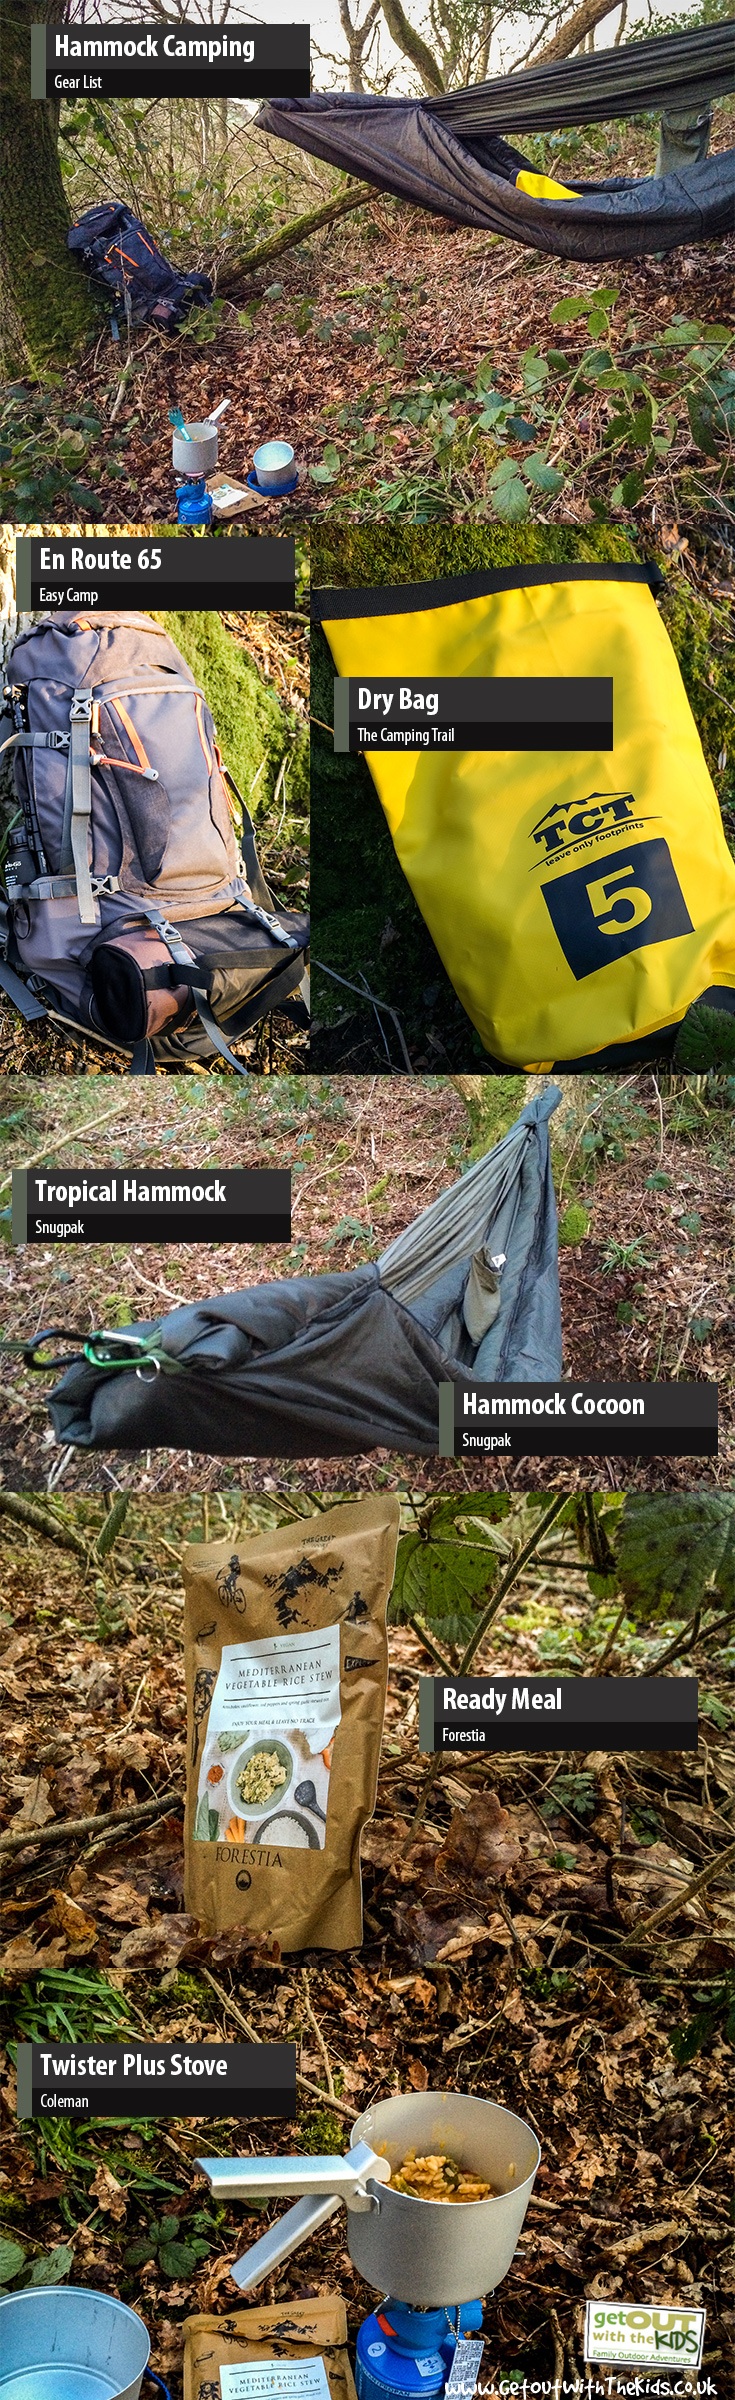 Hammock Camping Gear